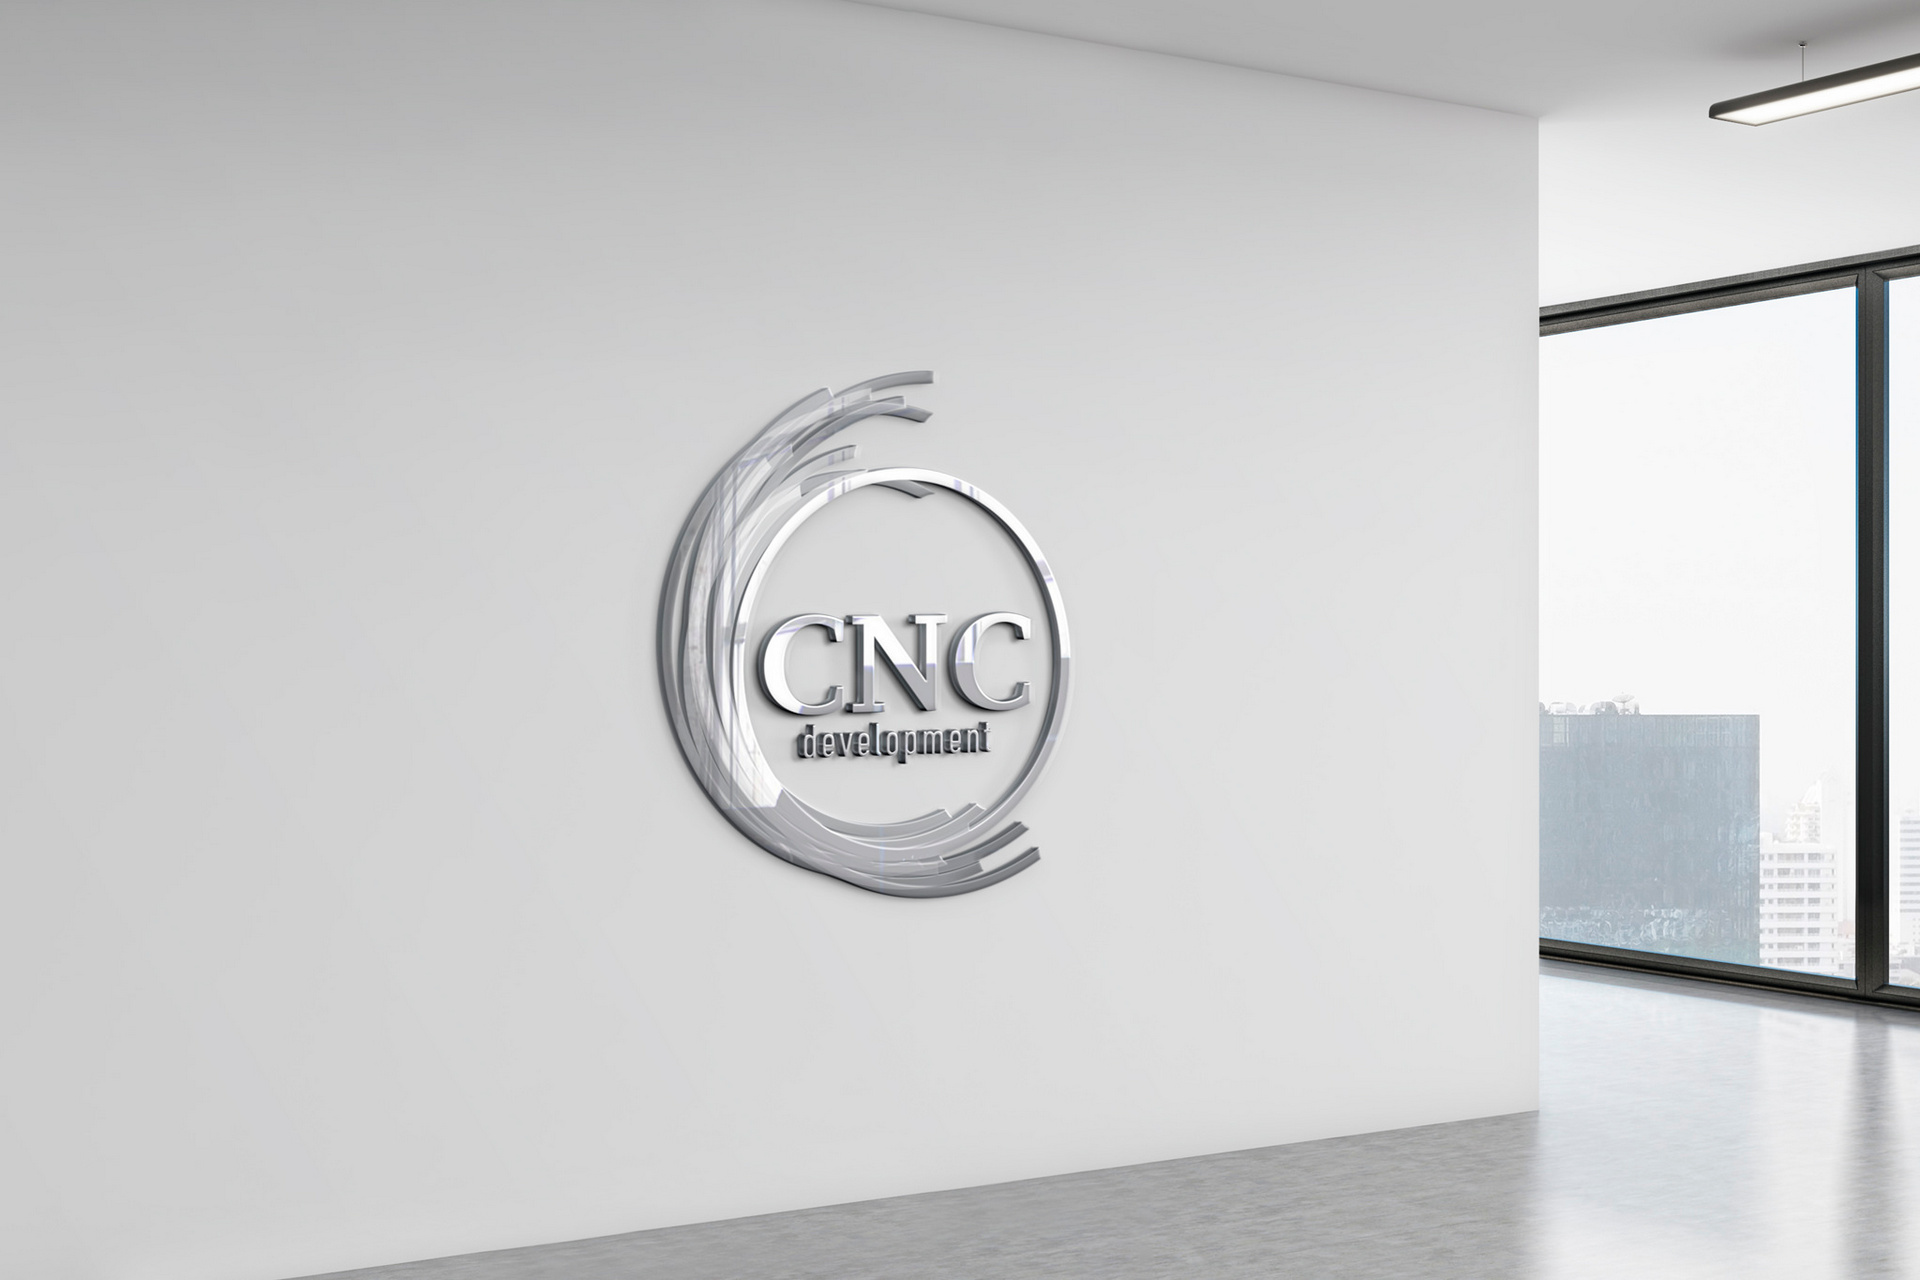 Cnc logo sign